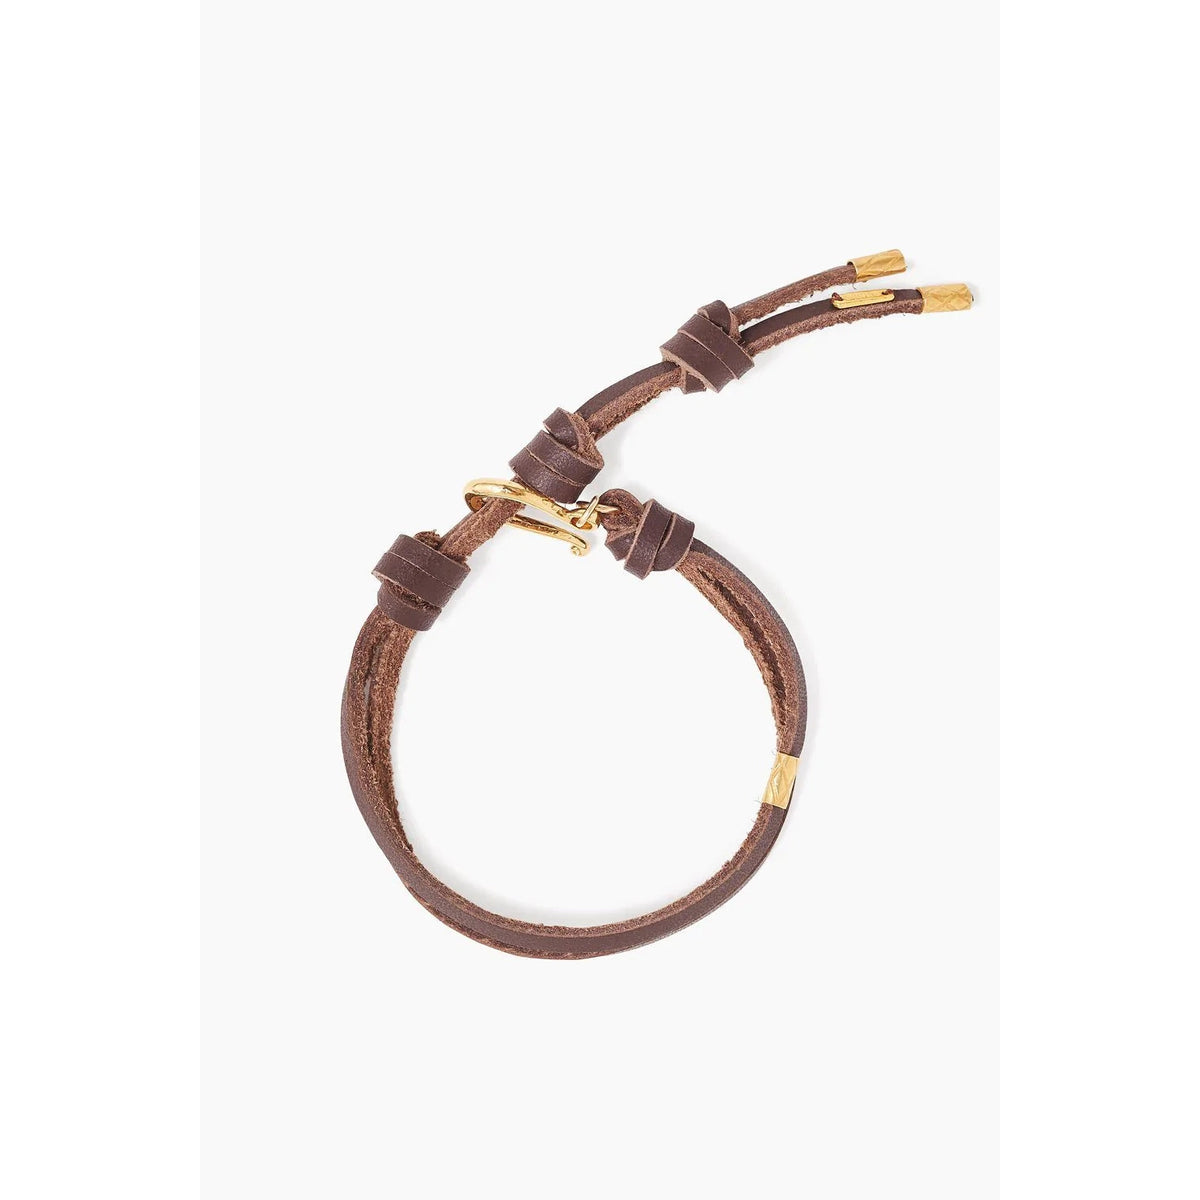 Elico D-Ring Bit Bracelet - Dark Brown